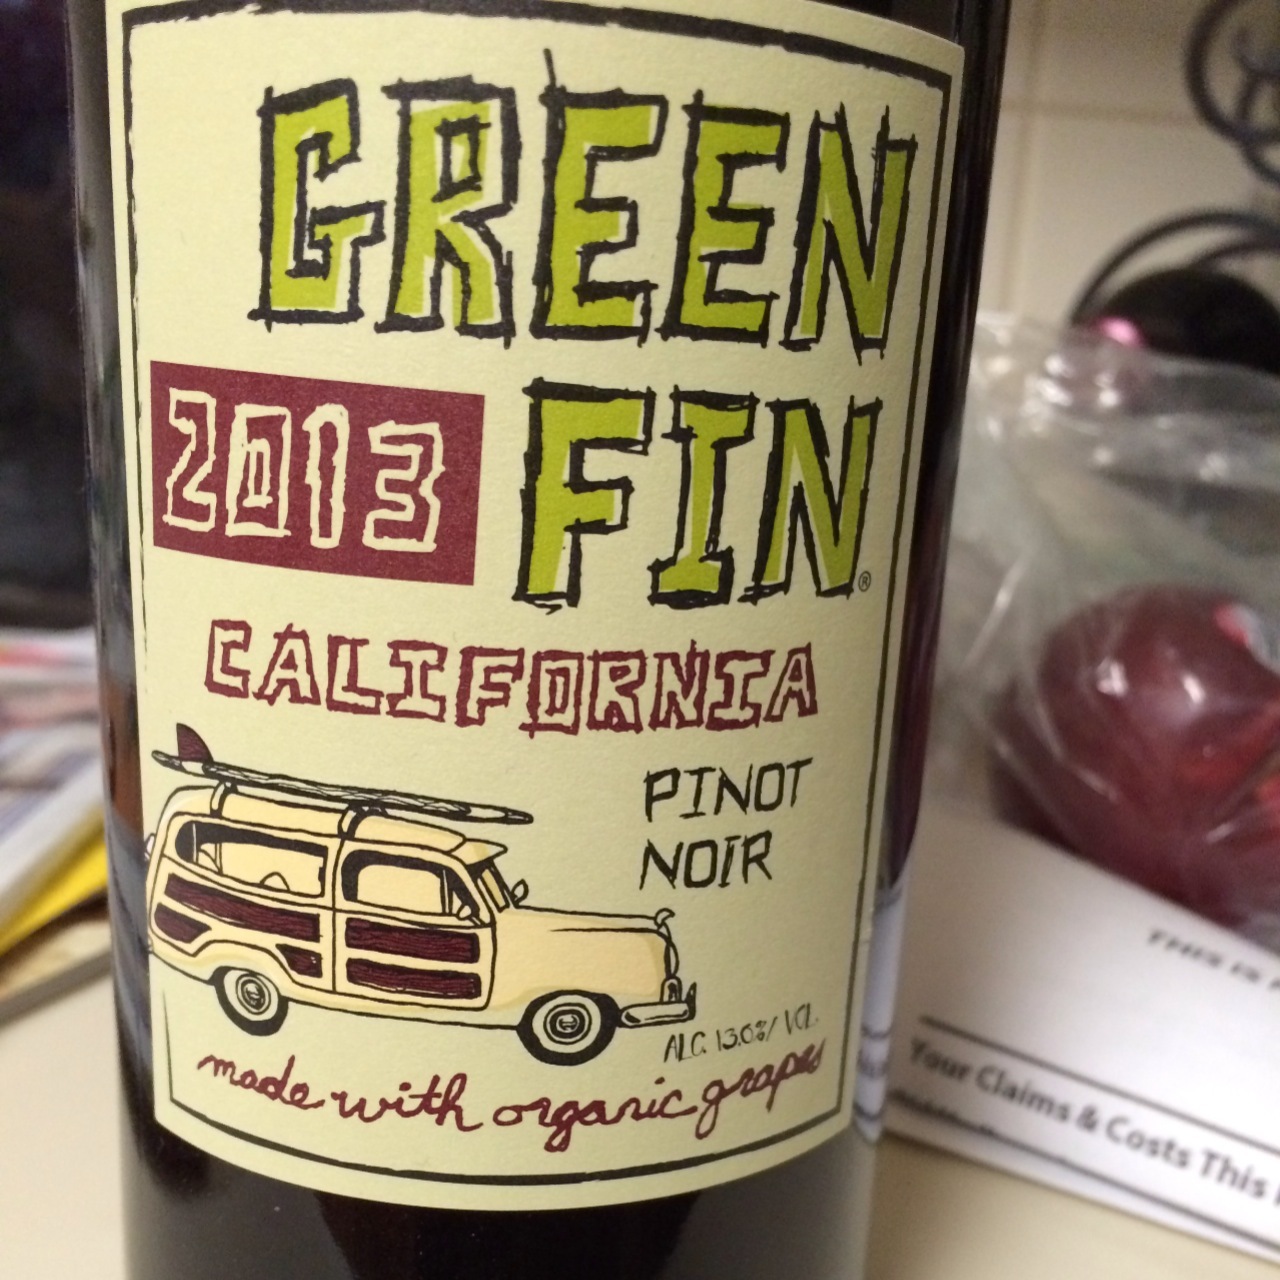 Green fin wine